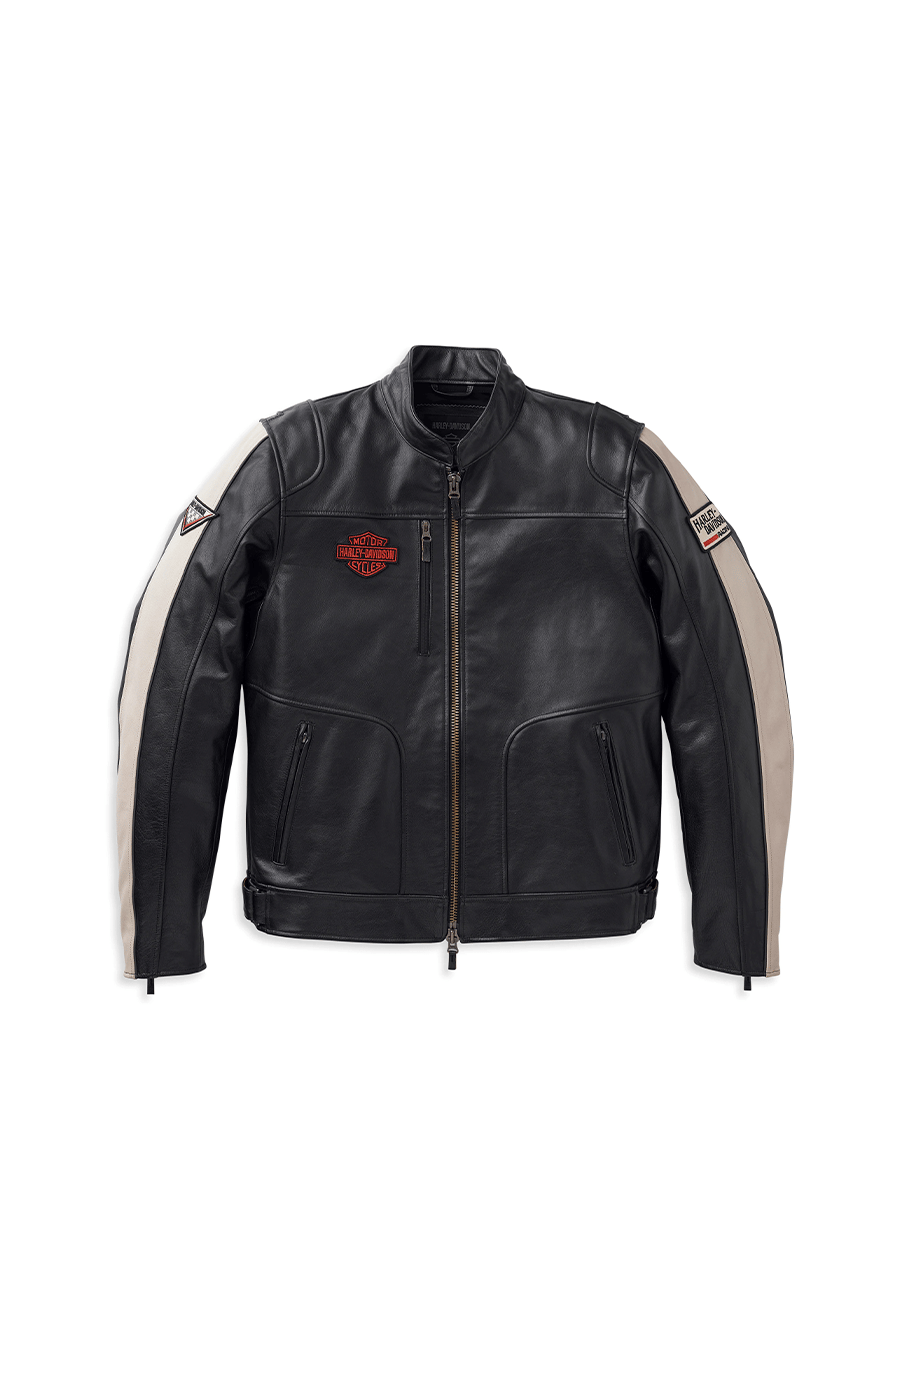 Jacket Enduro Erkek Deri Ceket - Harley Davidson Shop